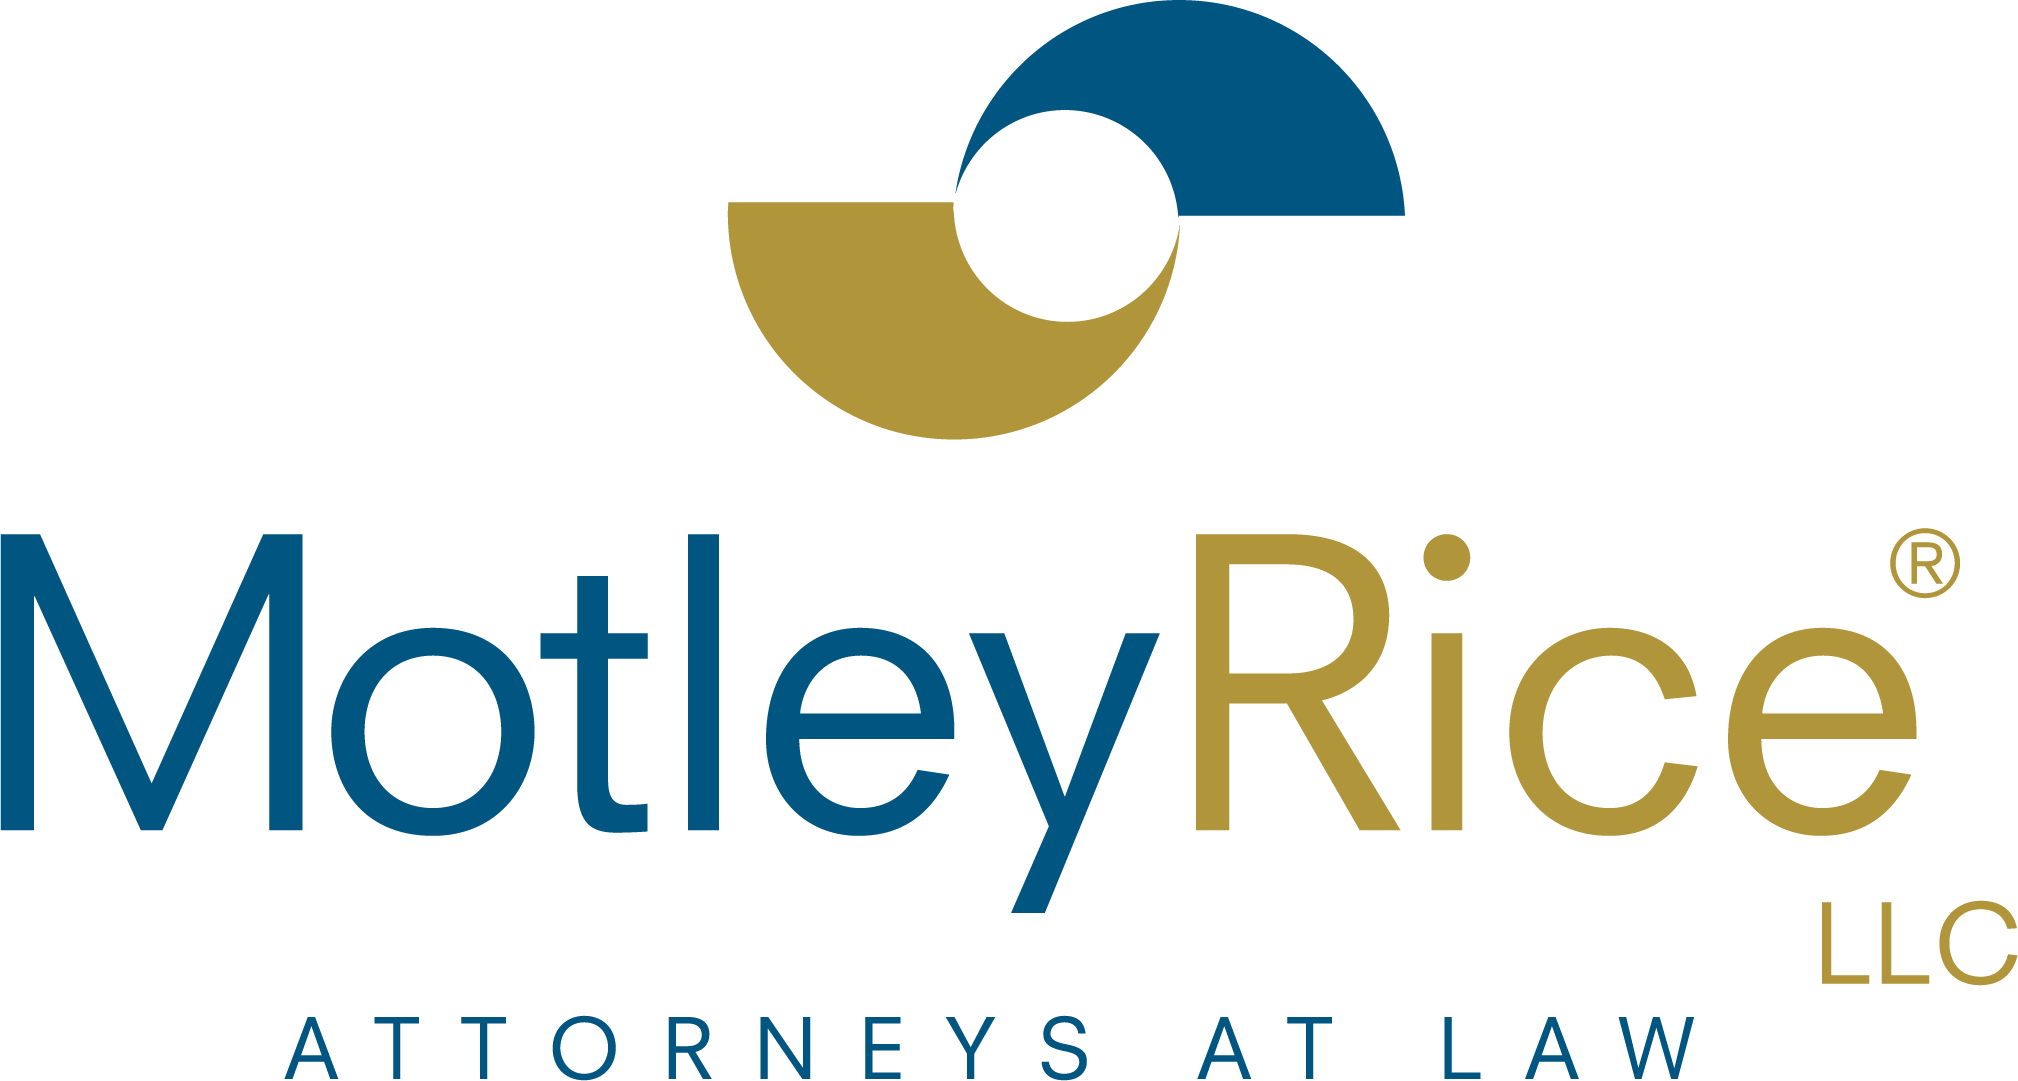 Motley Rice LLC Logo